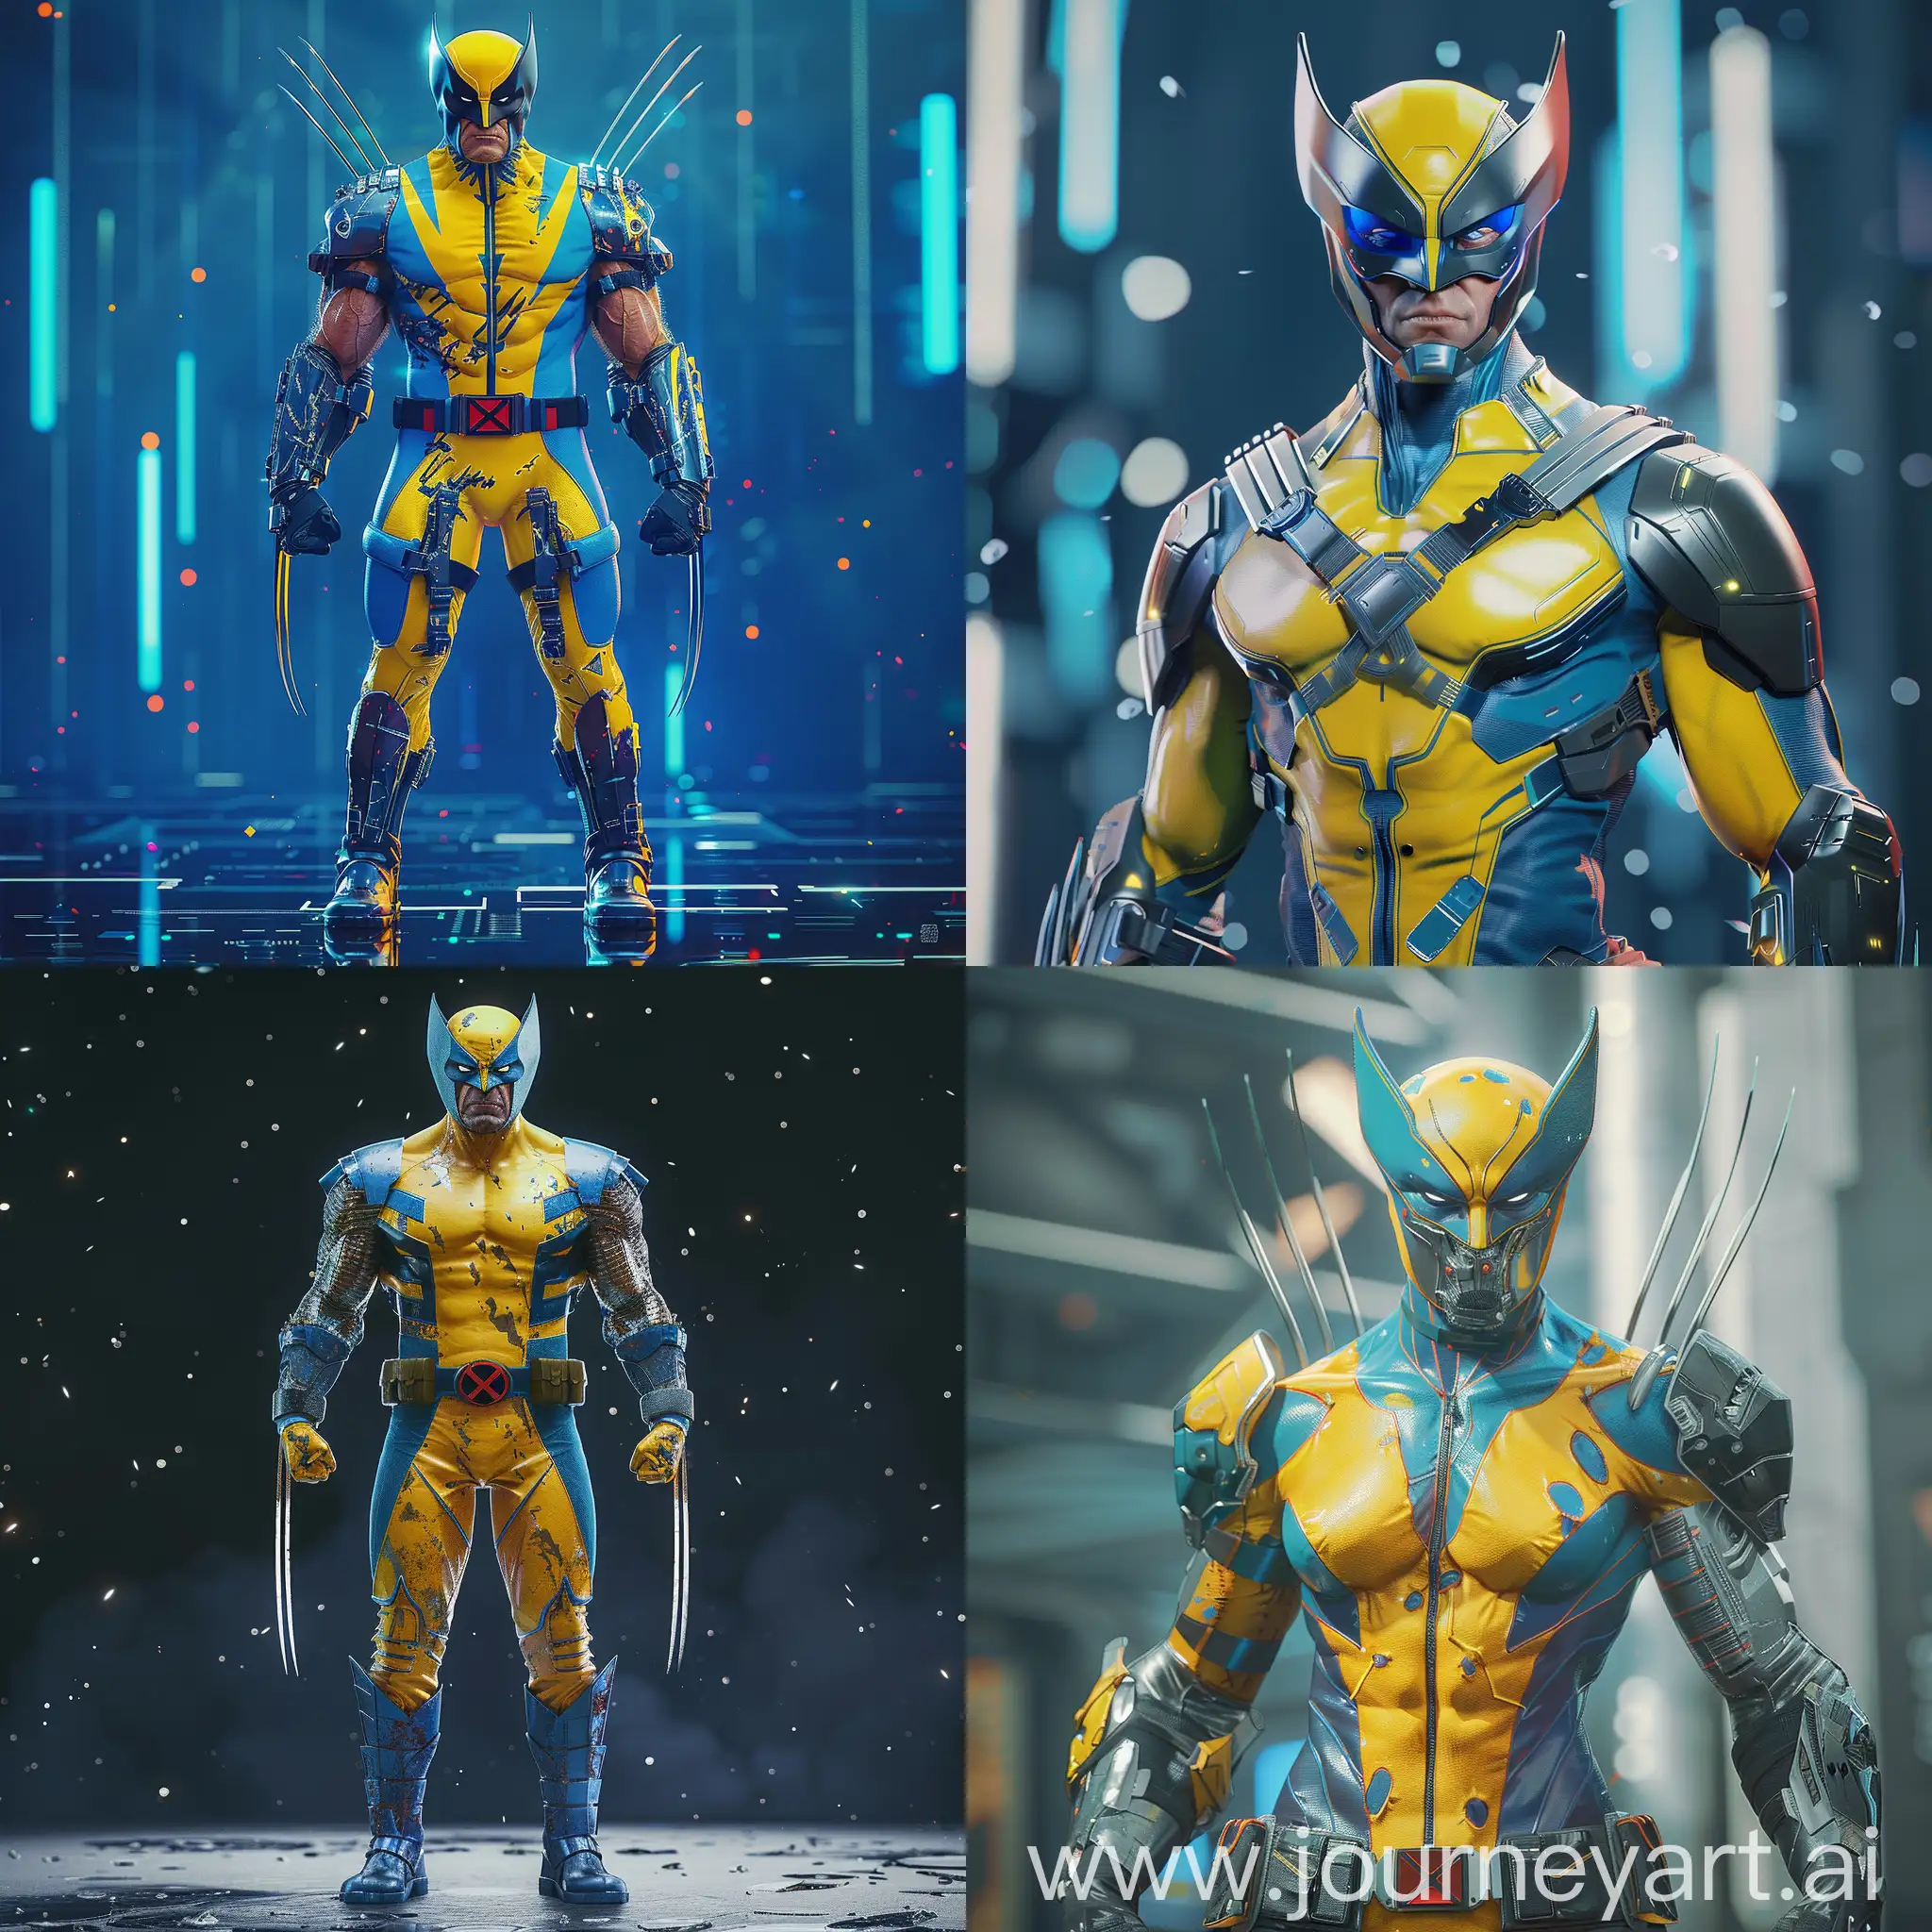 Cyberpunk-Wolverine-Futuristic-Rendition-in-Yellow-and-Blue-Cyberpunk-Attire